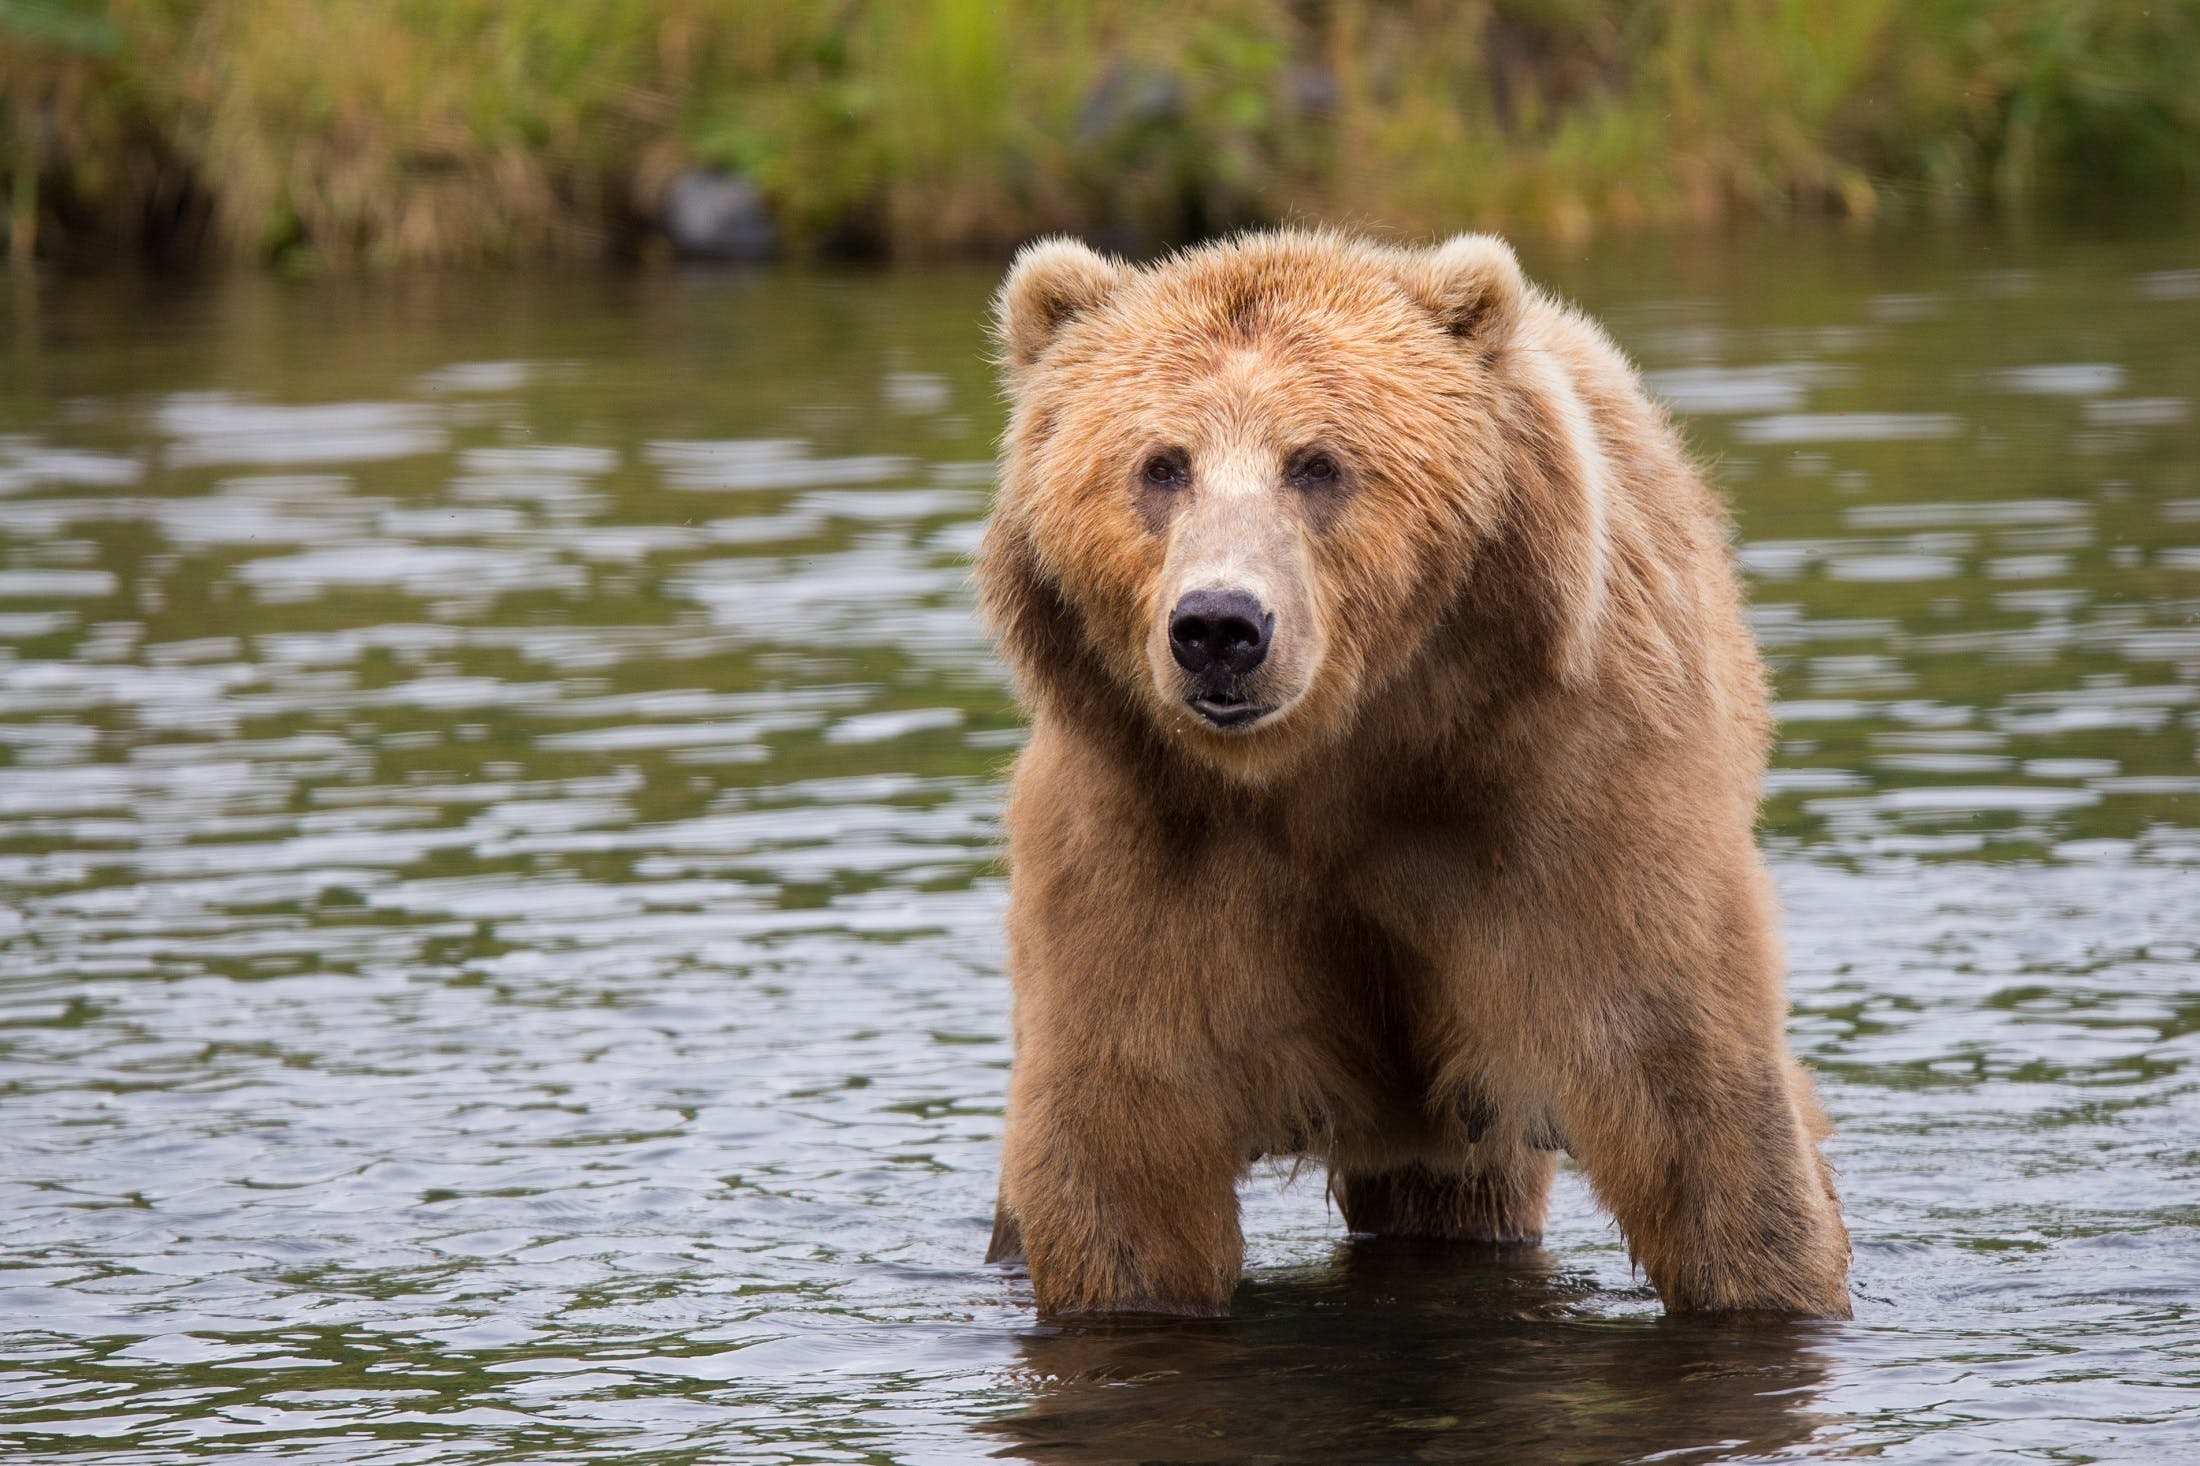 Bear walking on water. | Source: Pexels